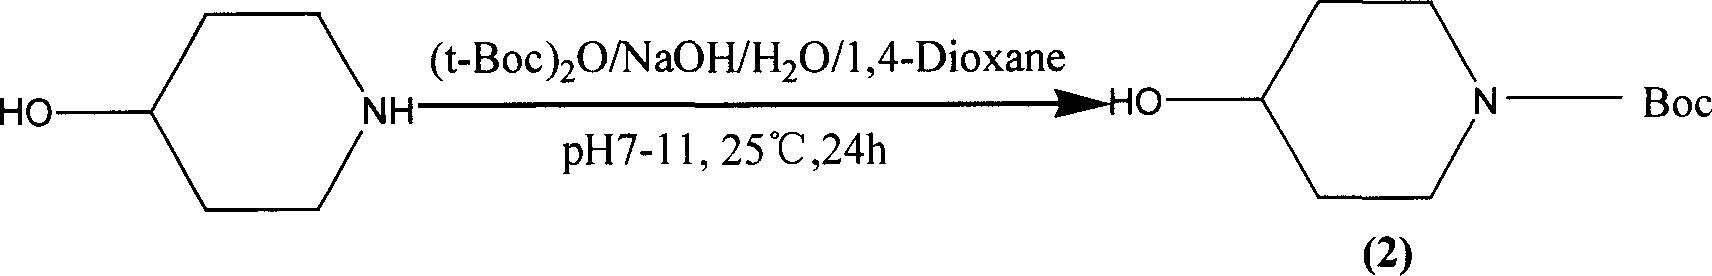 4-acetoxypiperidine hydrochlorate preparation method